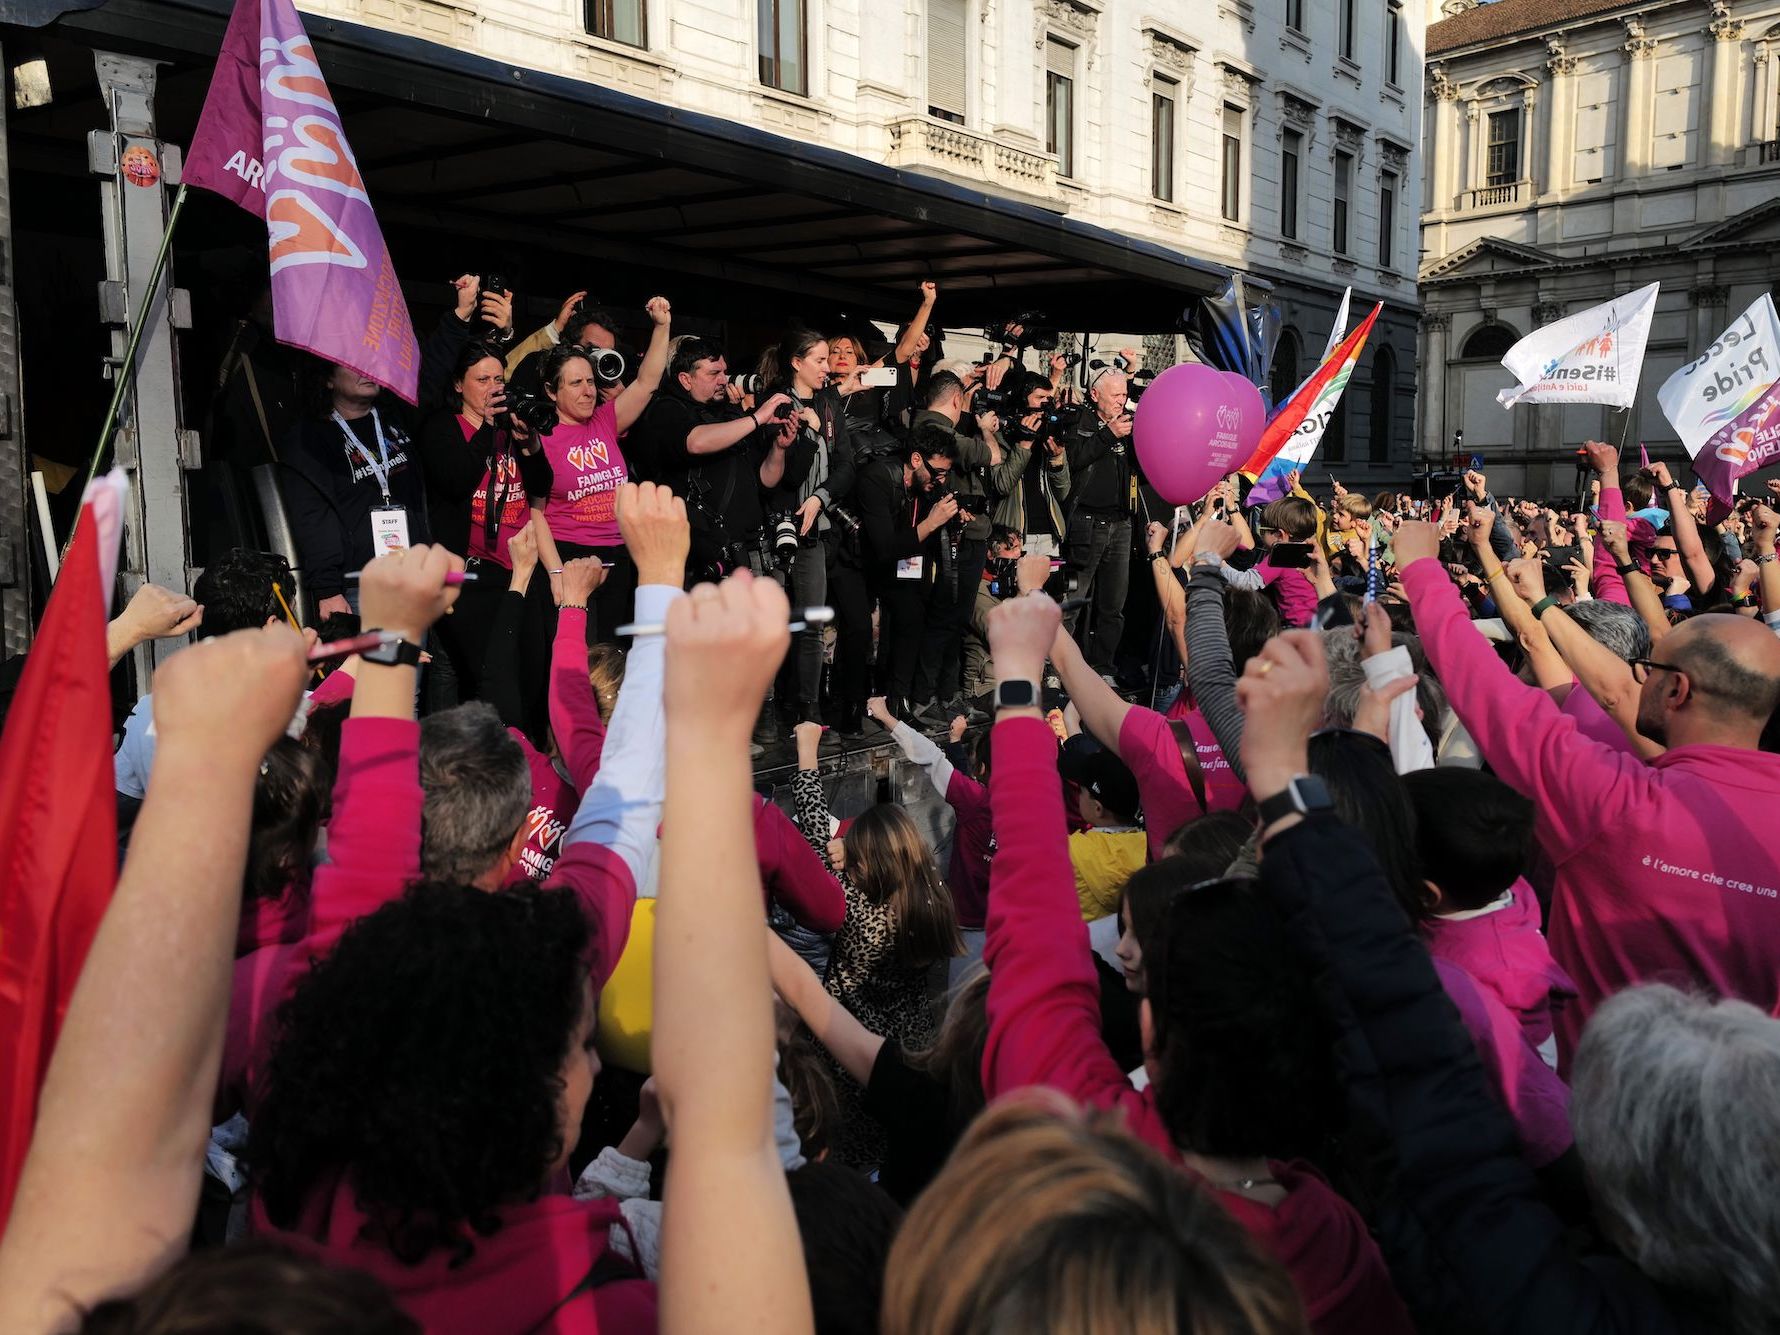 Ame Je Sex Vidos - Hundreds protest clampdown on same-sex parents in Milan | CNN